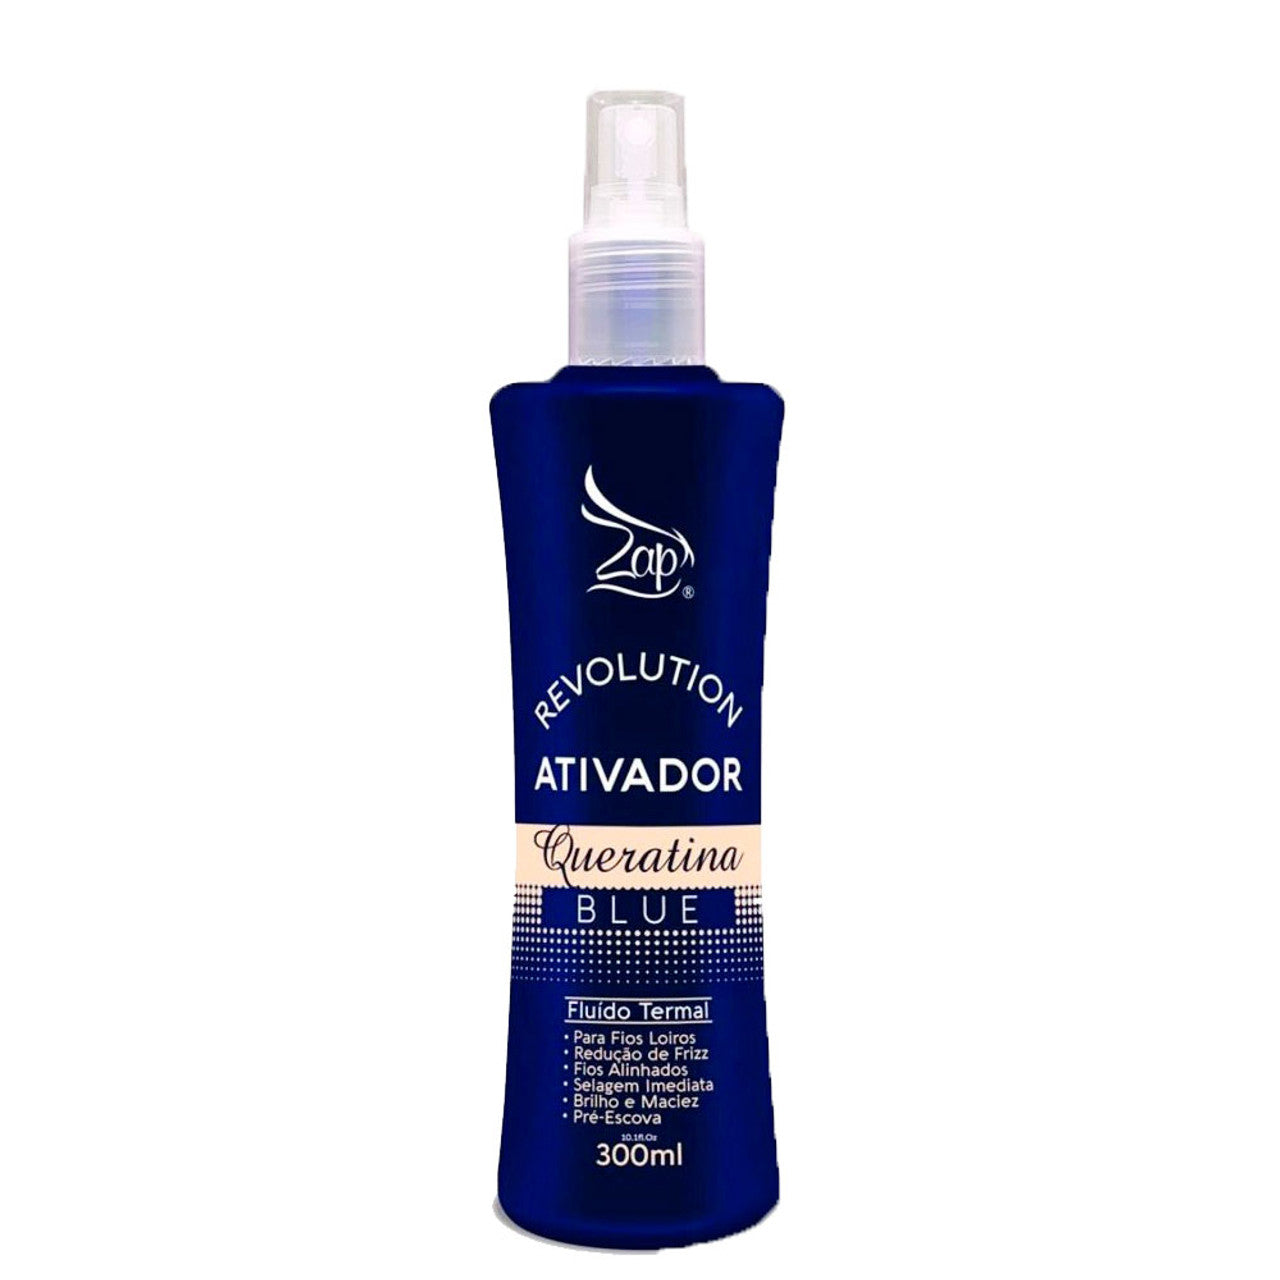 Zap Cosmeticos, Revolution Ativador Queratina Blue, huile de finition pour cheveux, 300 ml